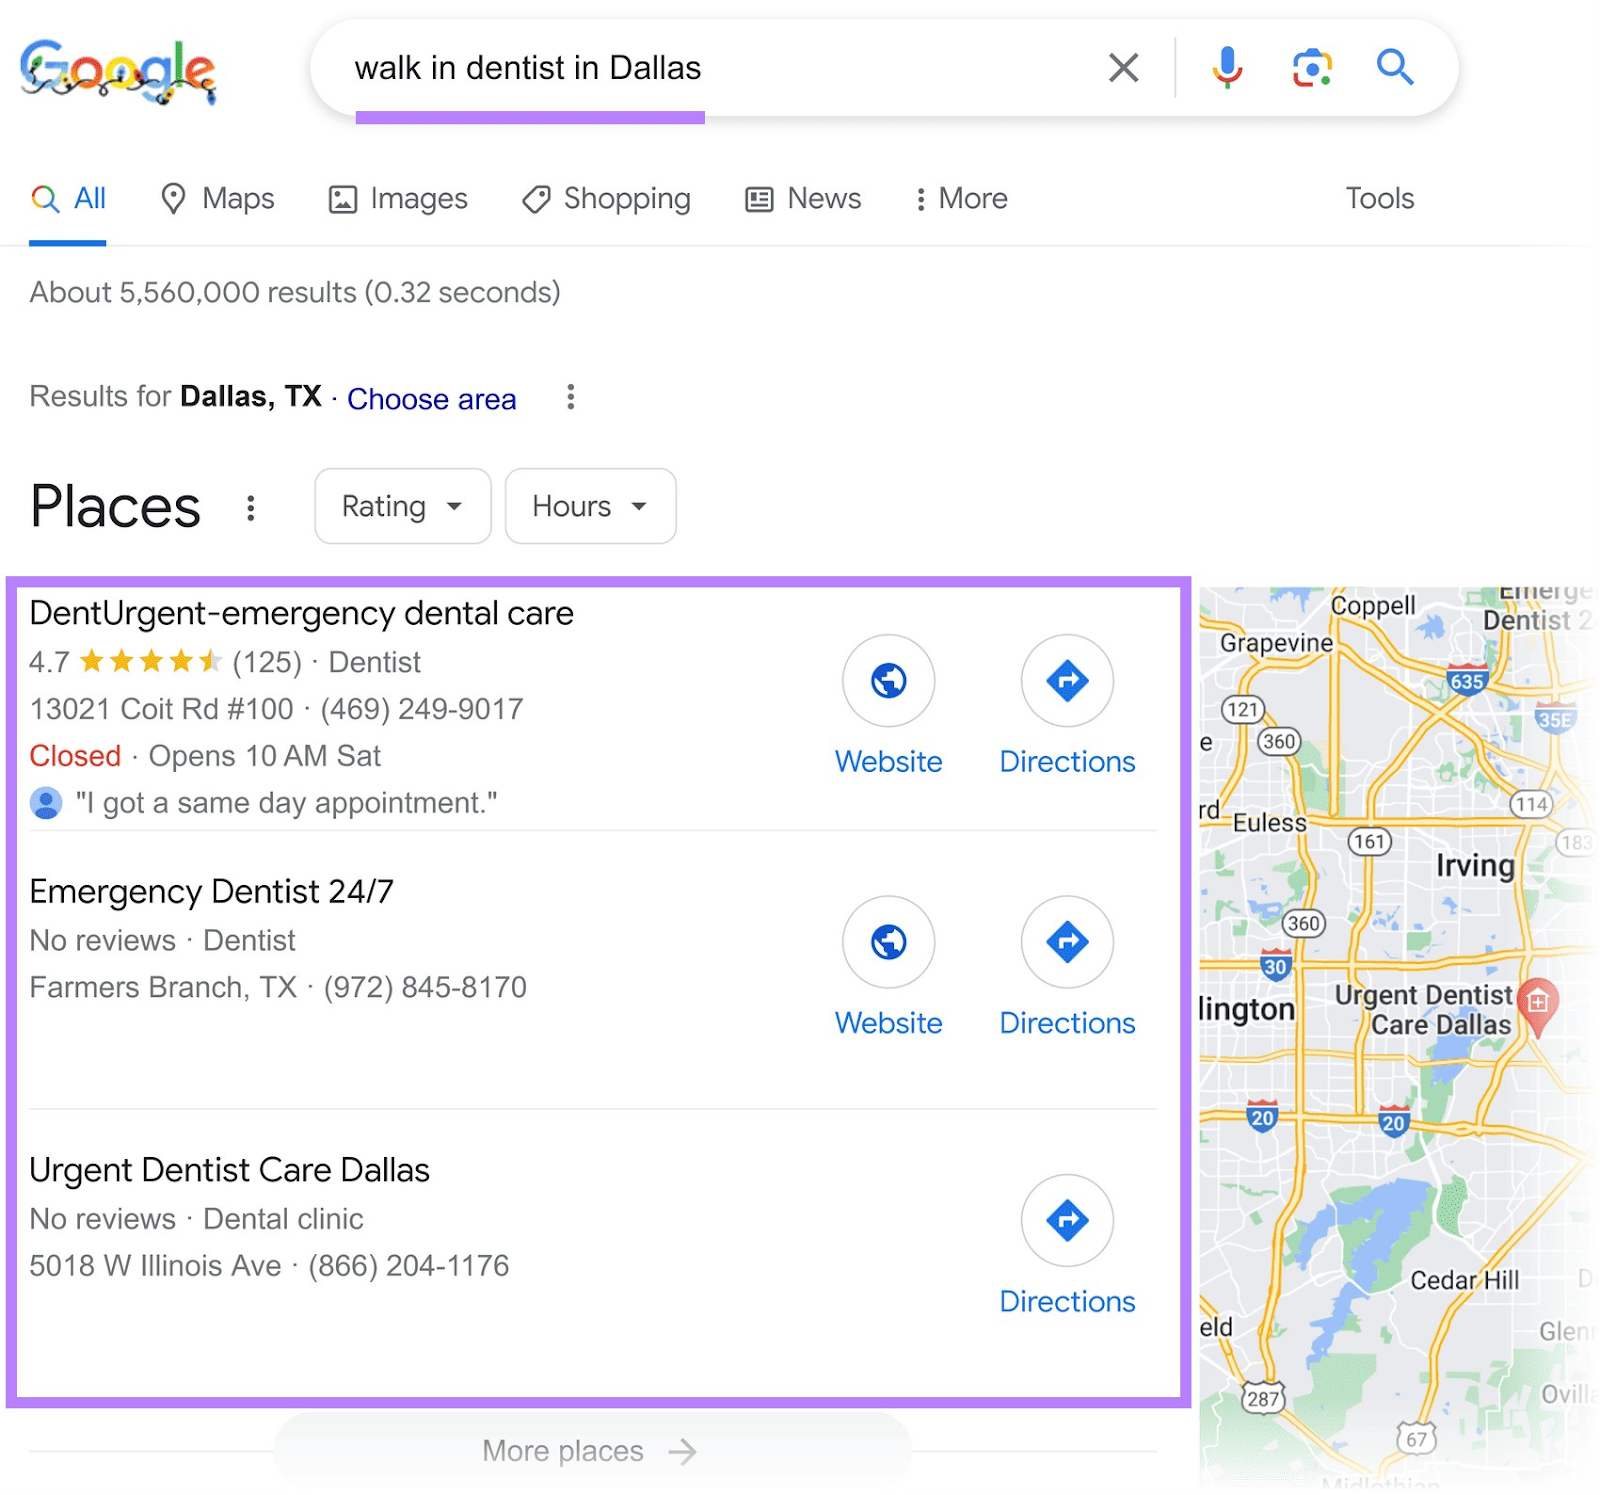 Google local results for "walk in dentist in Dallas" query